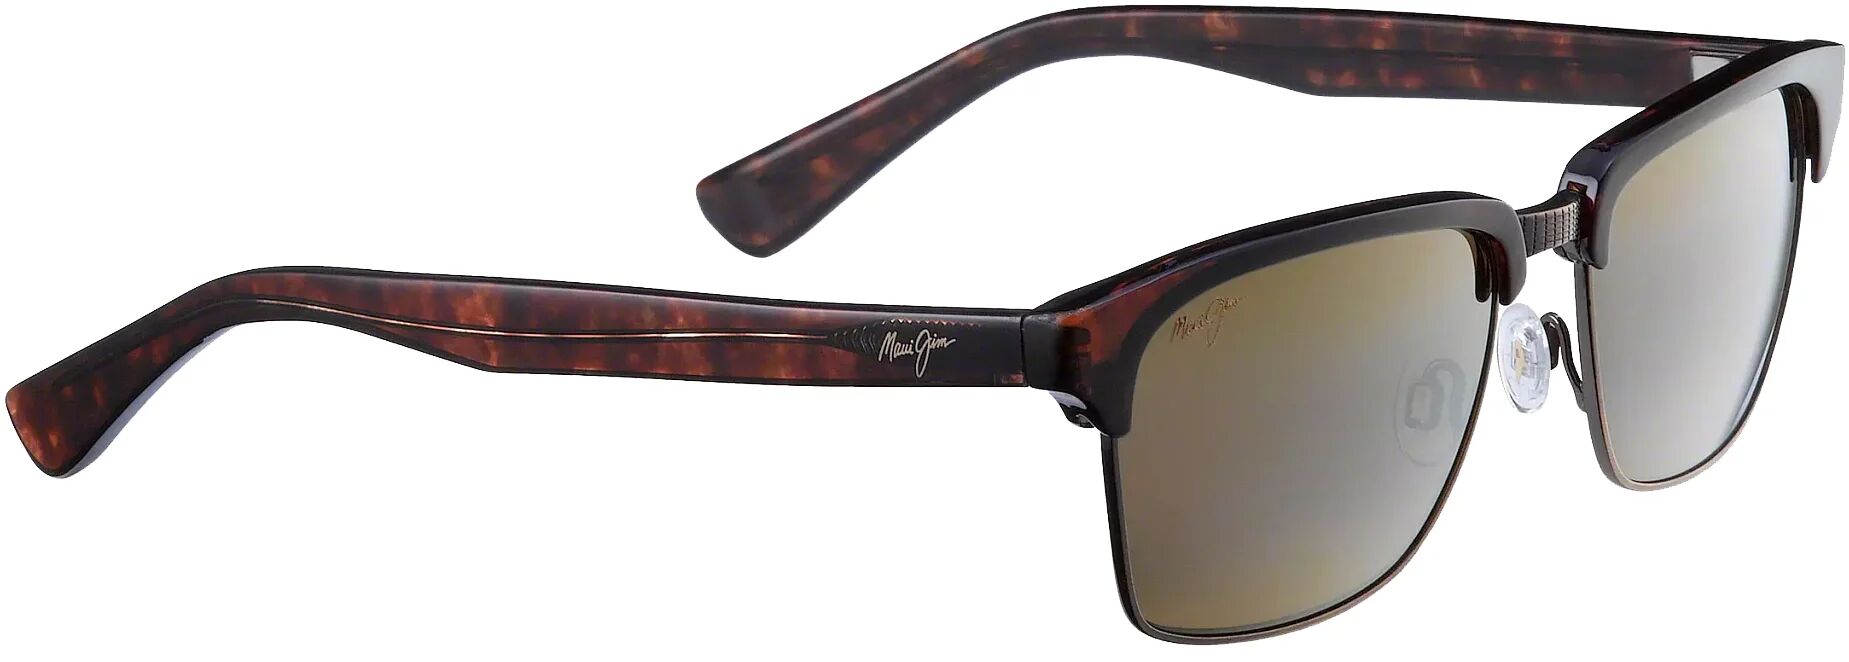 Maui Jim Kawika Polarized Classic Tortoise With Antique Gold Sunglasses, Nylon